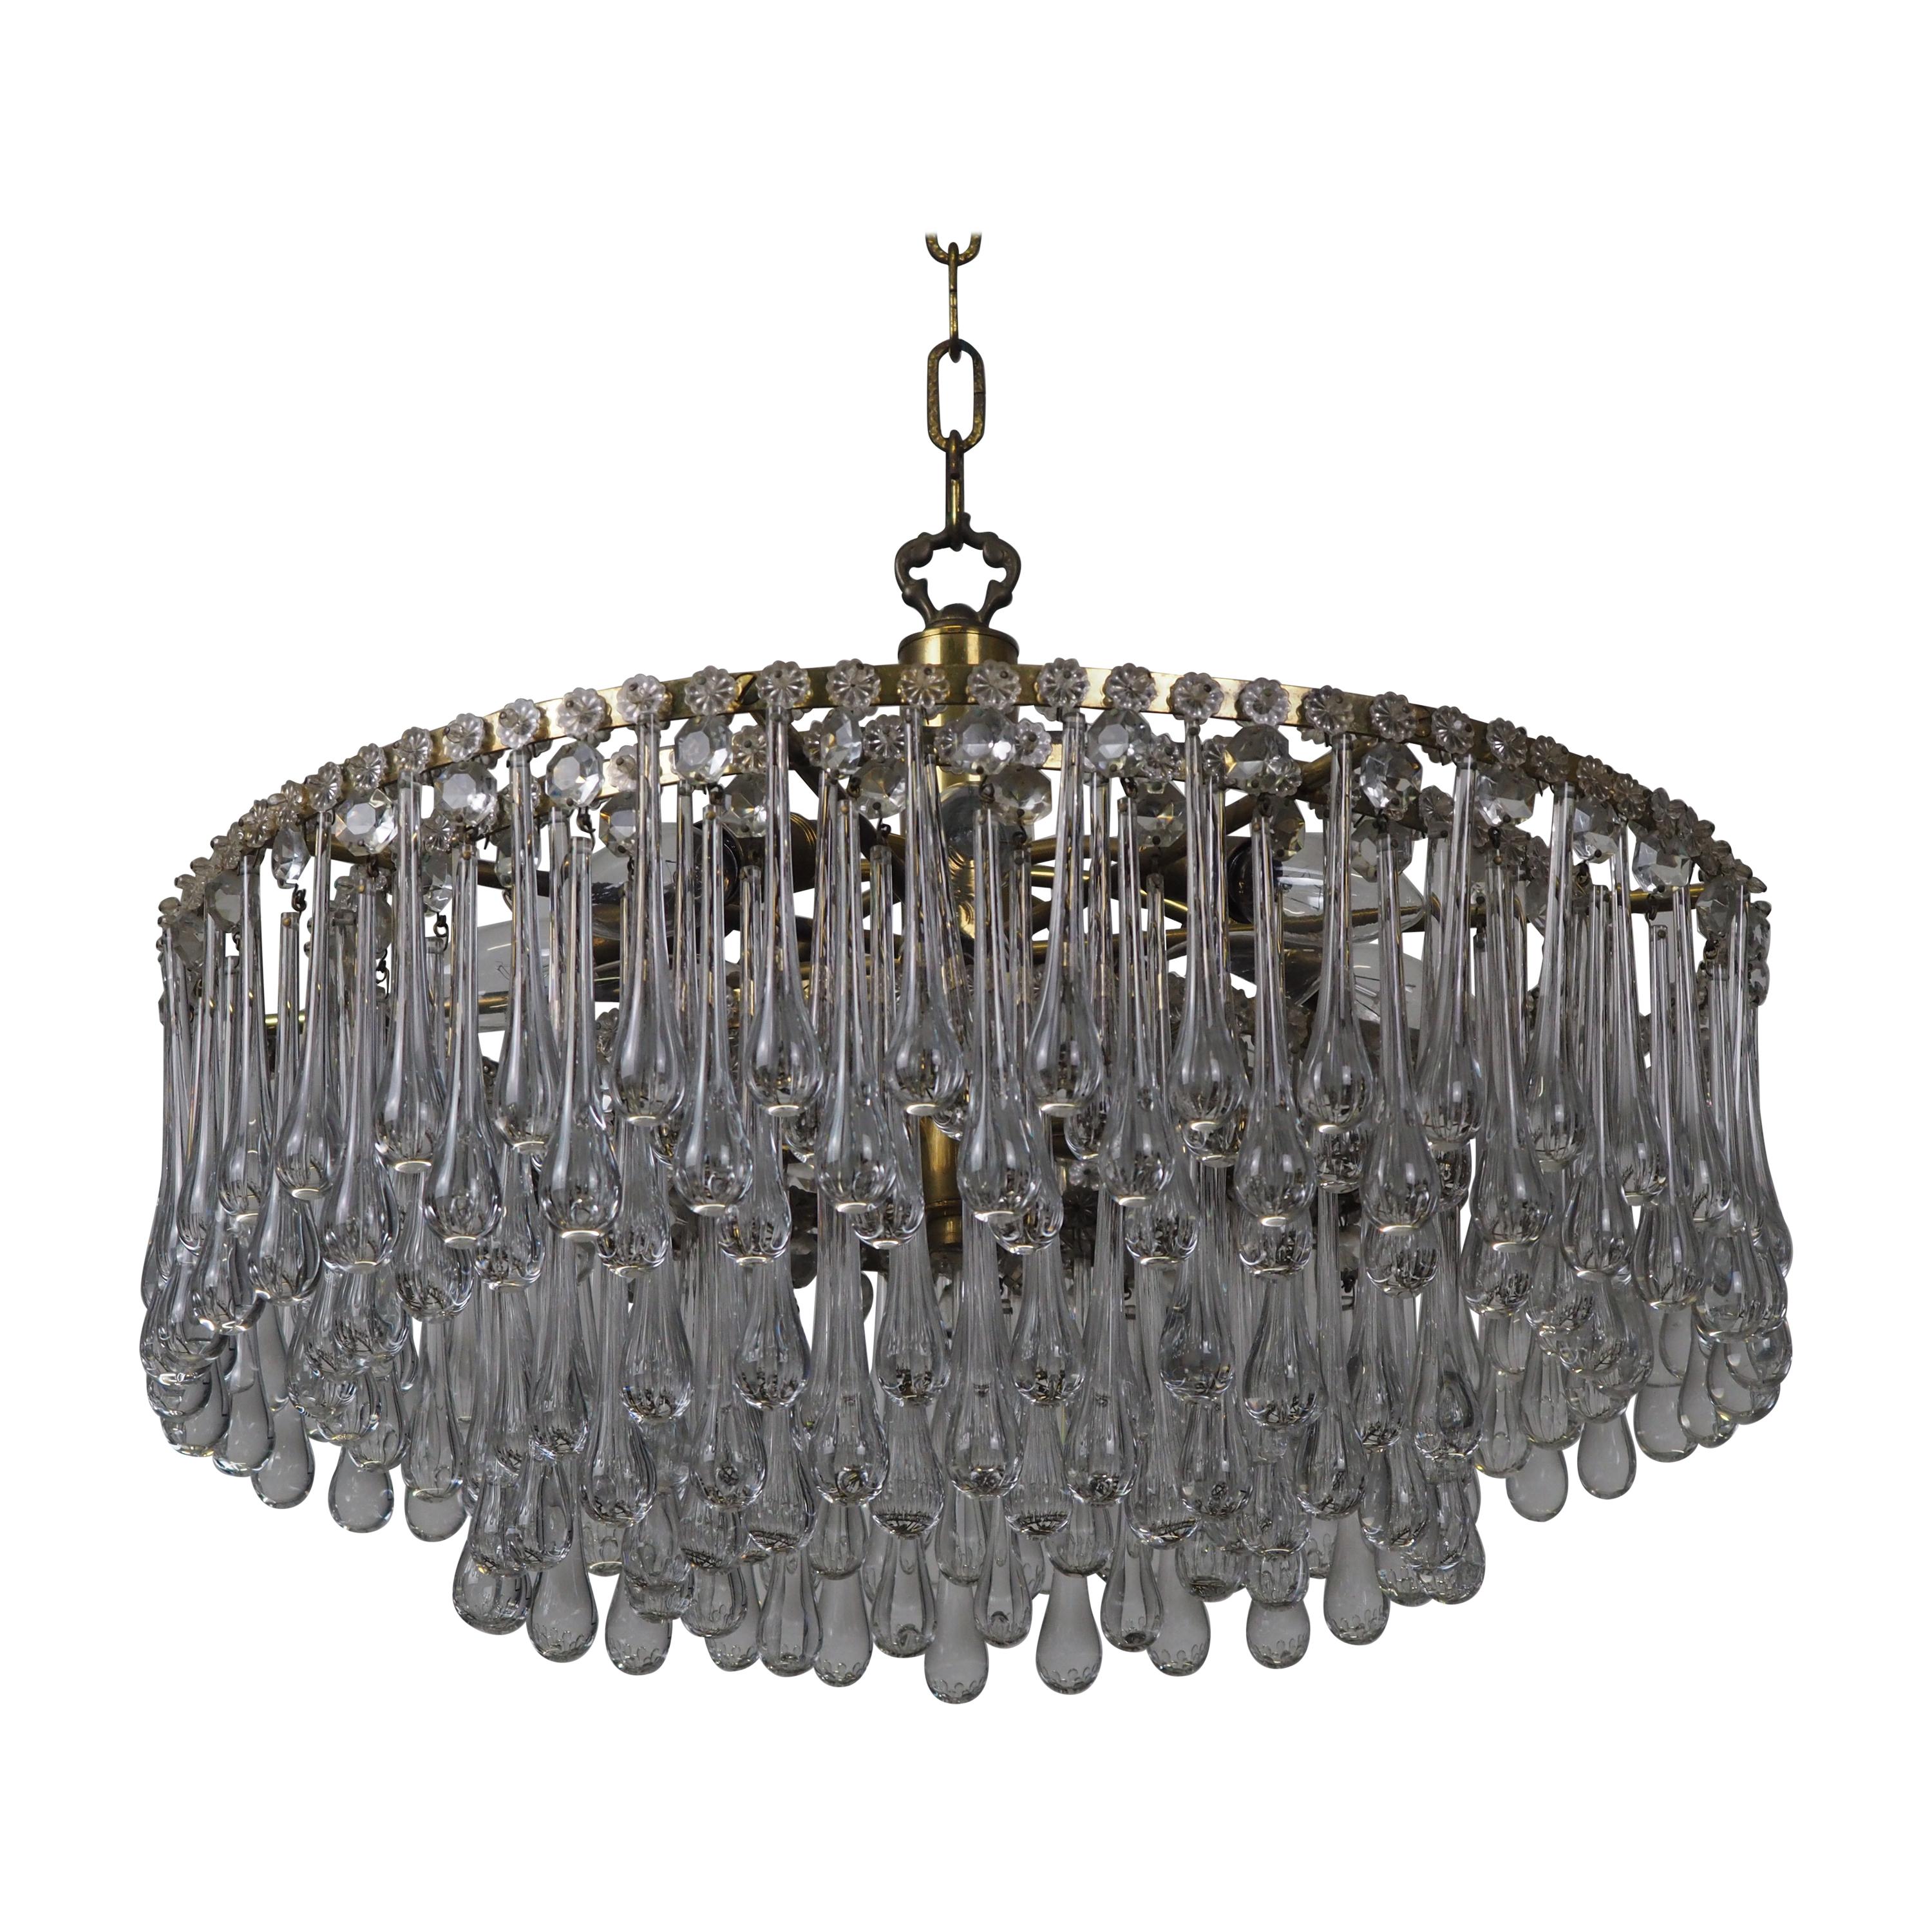 D216 Details about   10 lovely glass  pendaloques chandelier drops 